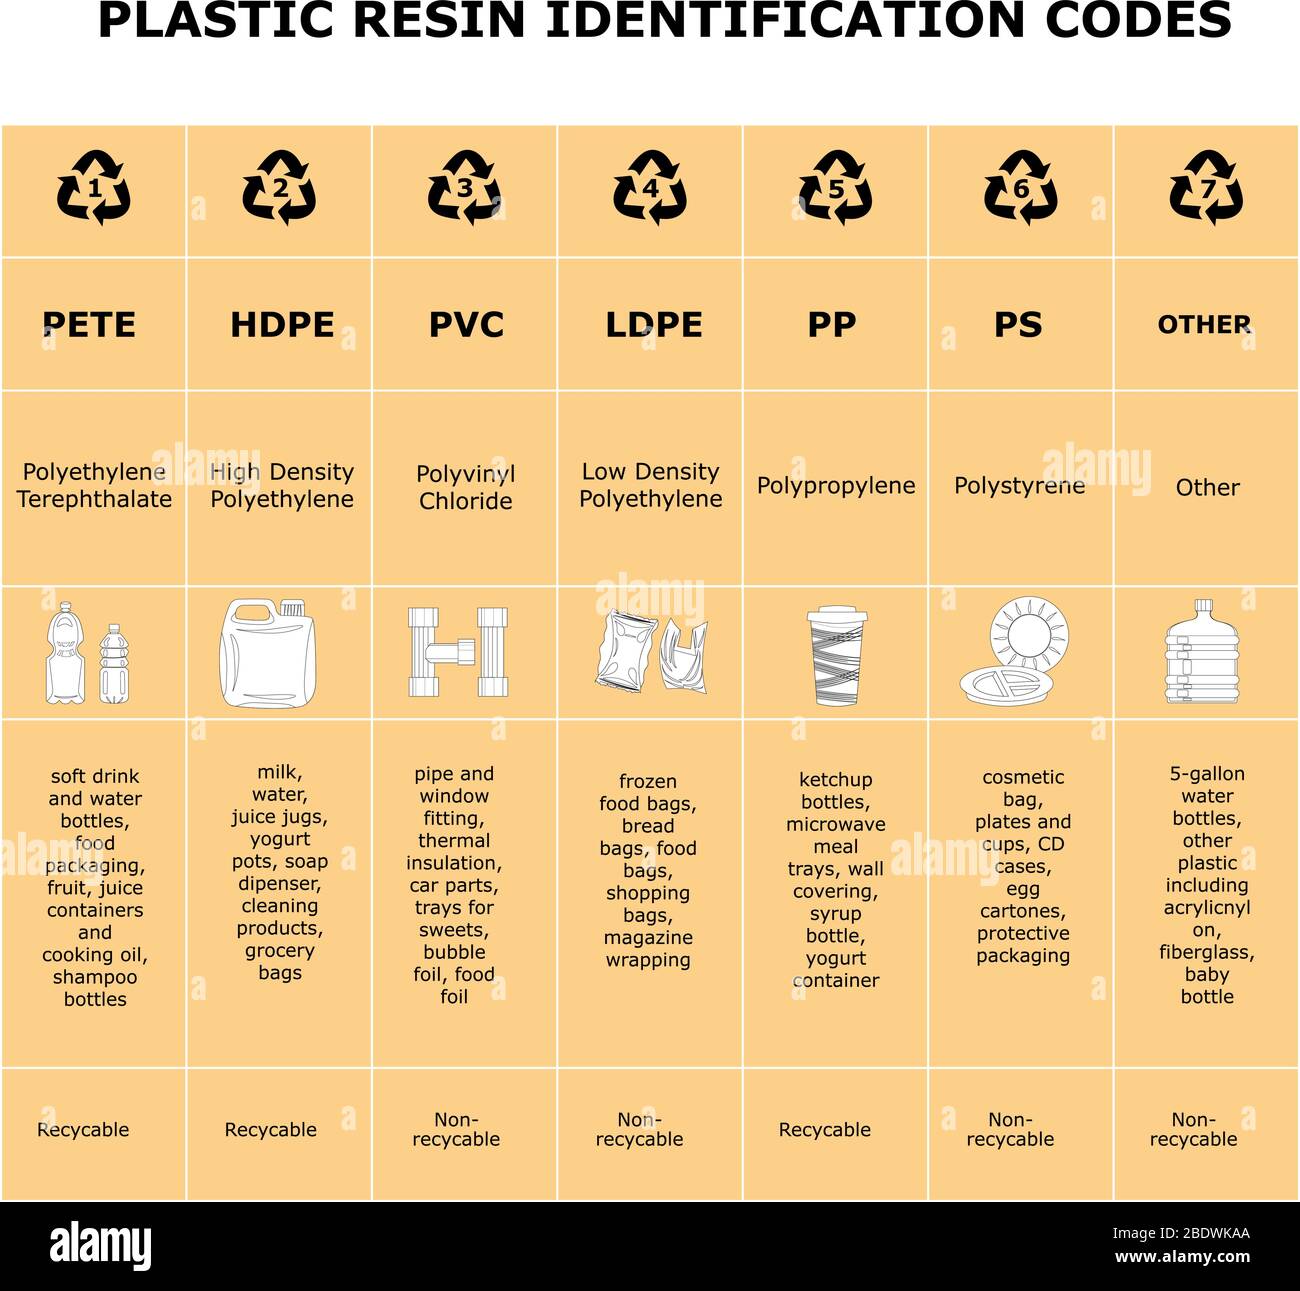 Recyclingcodes bei Plastik - VeganBlatt